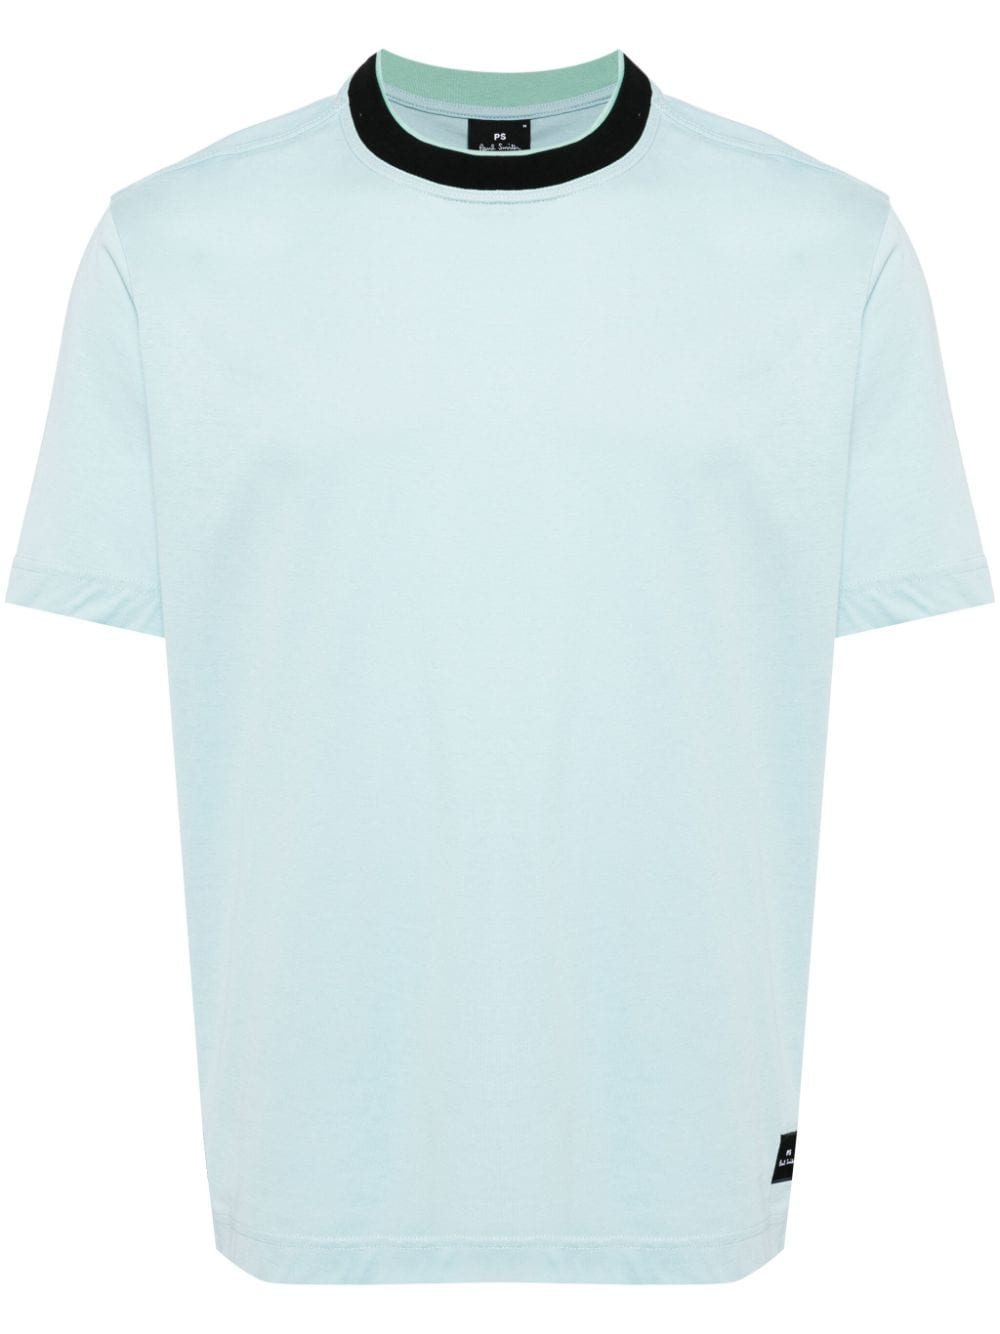 PS Paul Smith T-Shirt mit Kontrastkragen - Blau